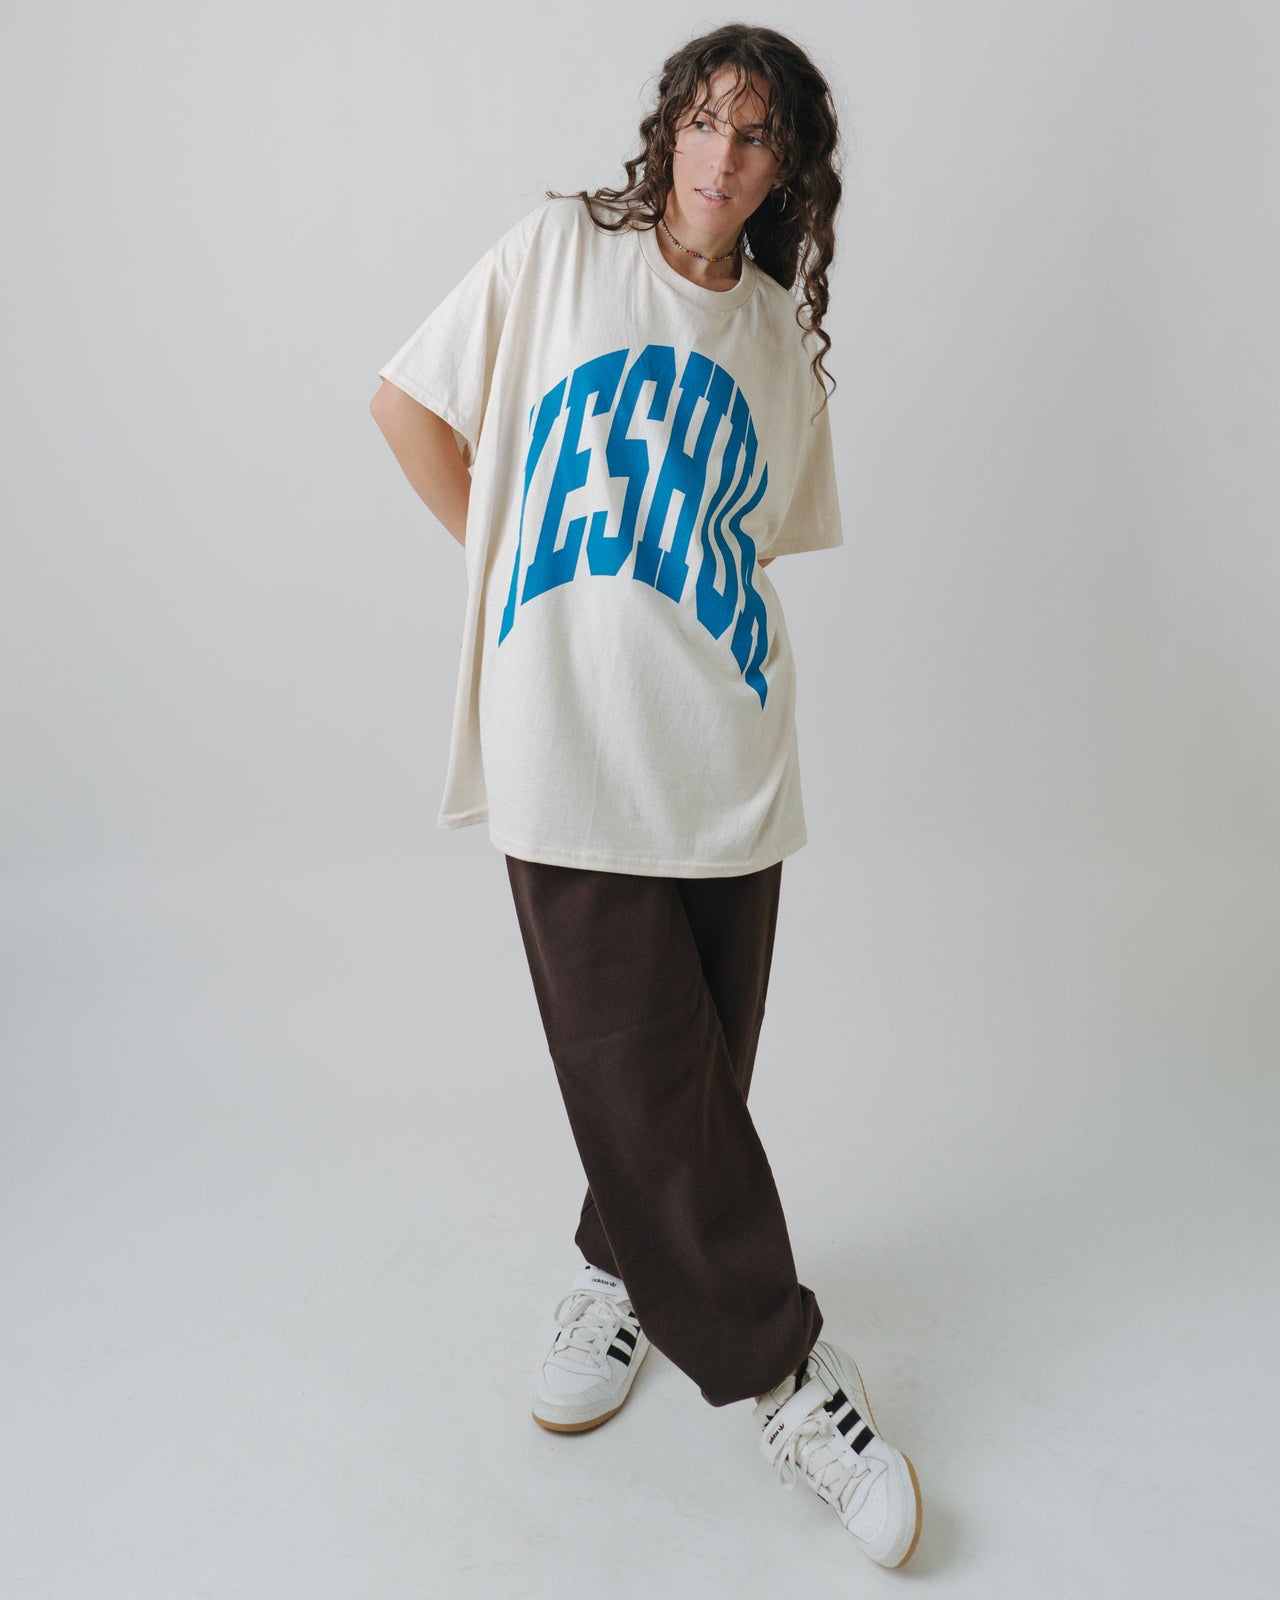 Yeshua Spirit Christian tee t-shirt in cream by NHIM Apparel Christian clothing brand 